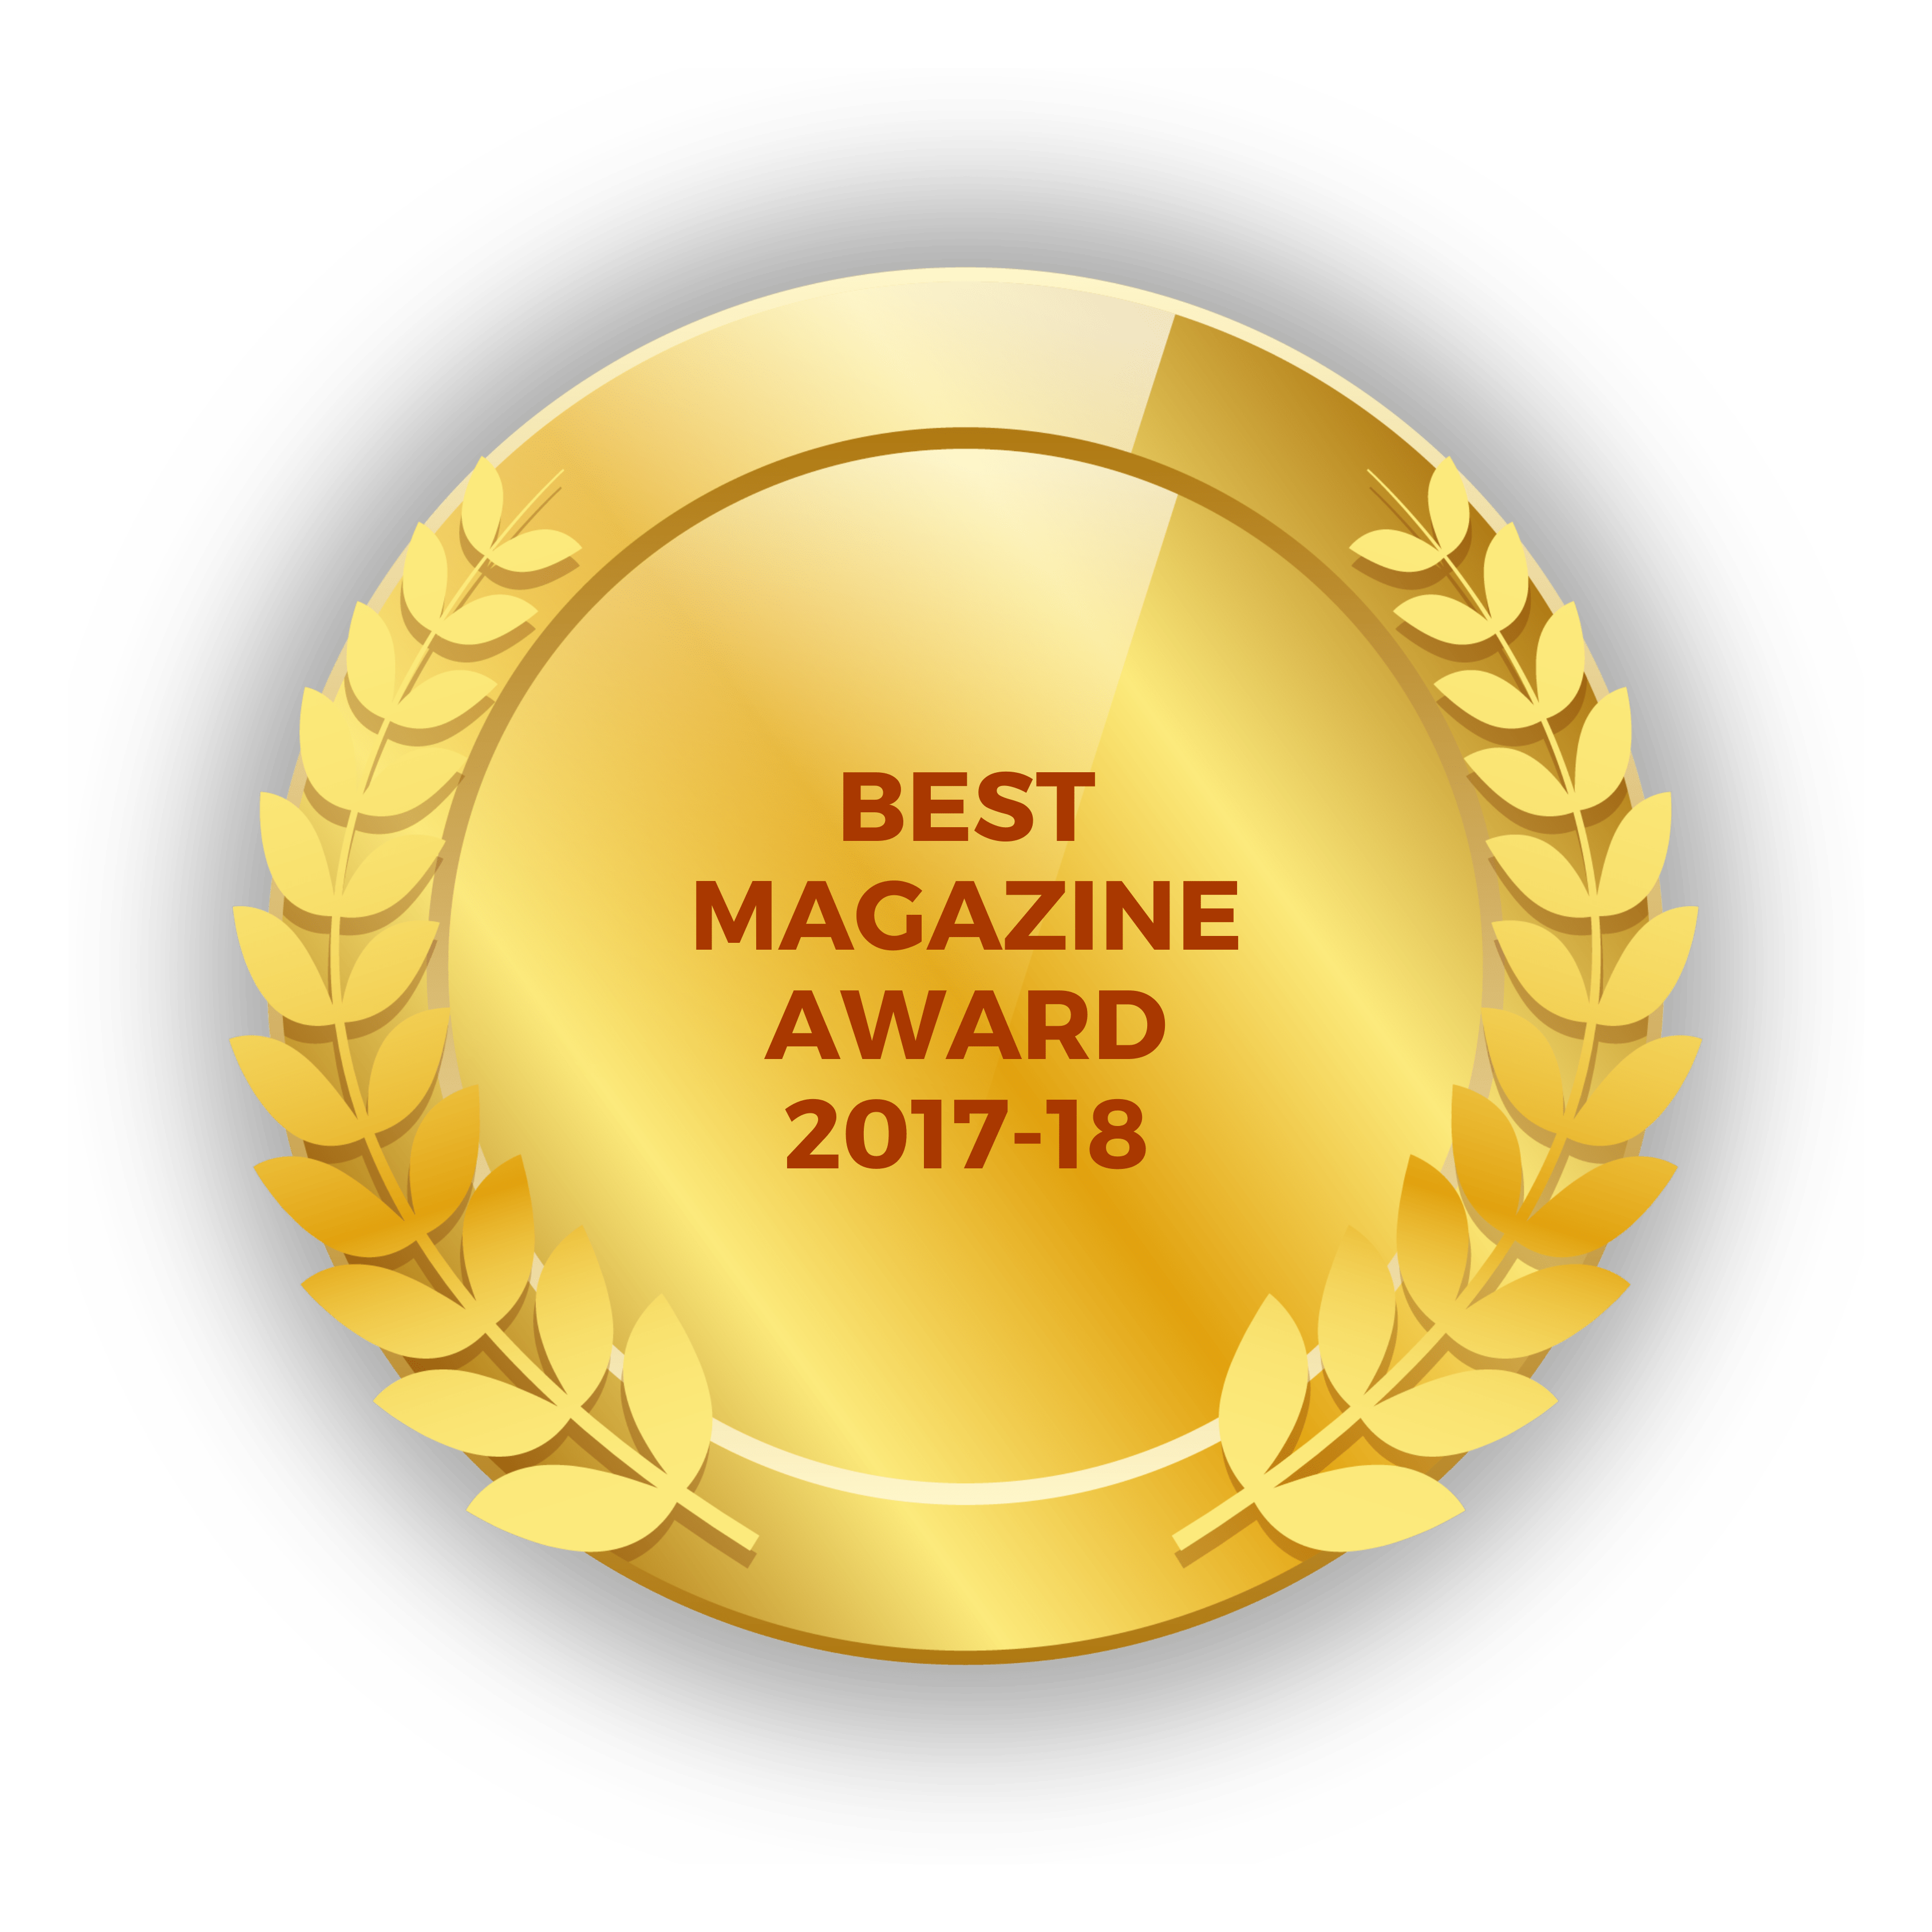 Best Magazine Award (2017-18)